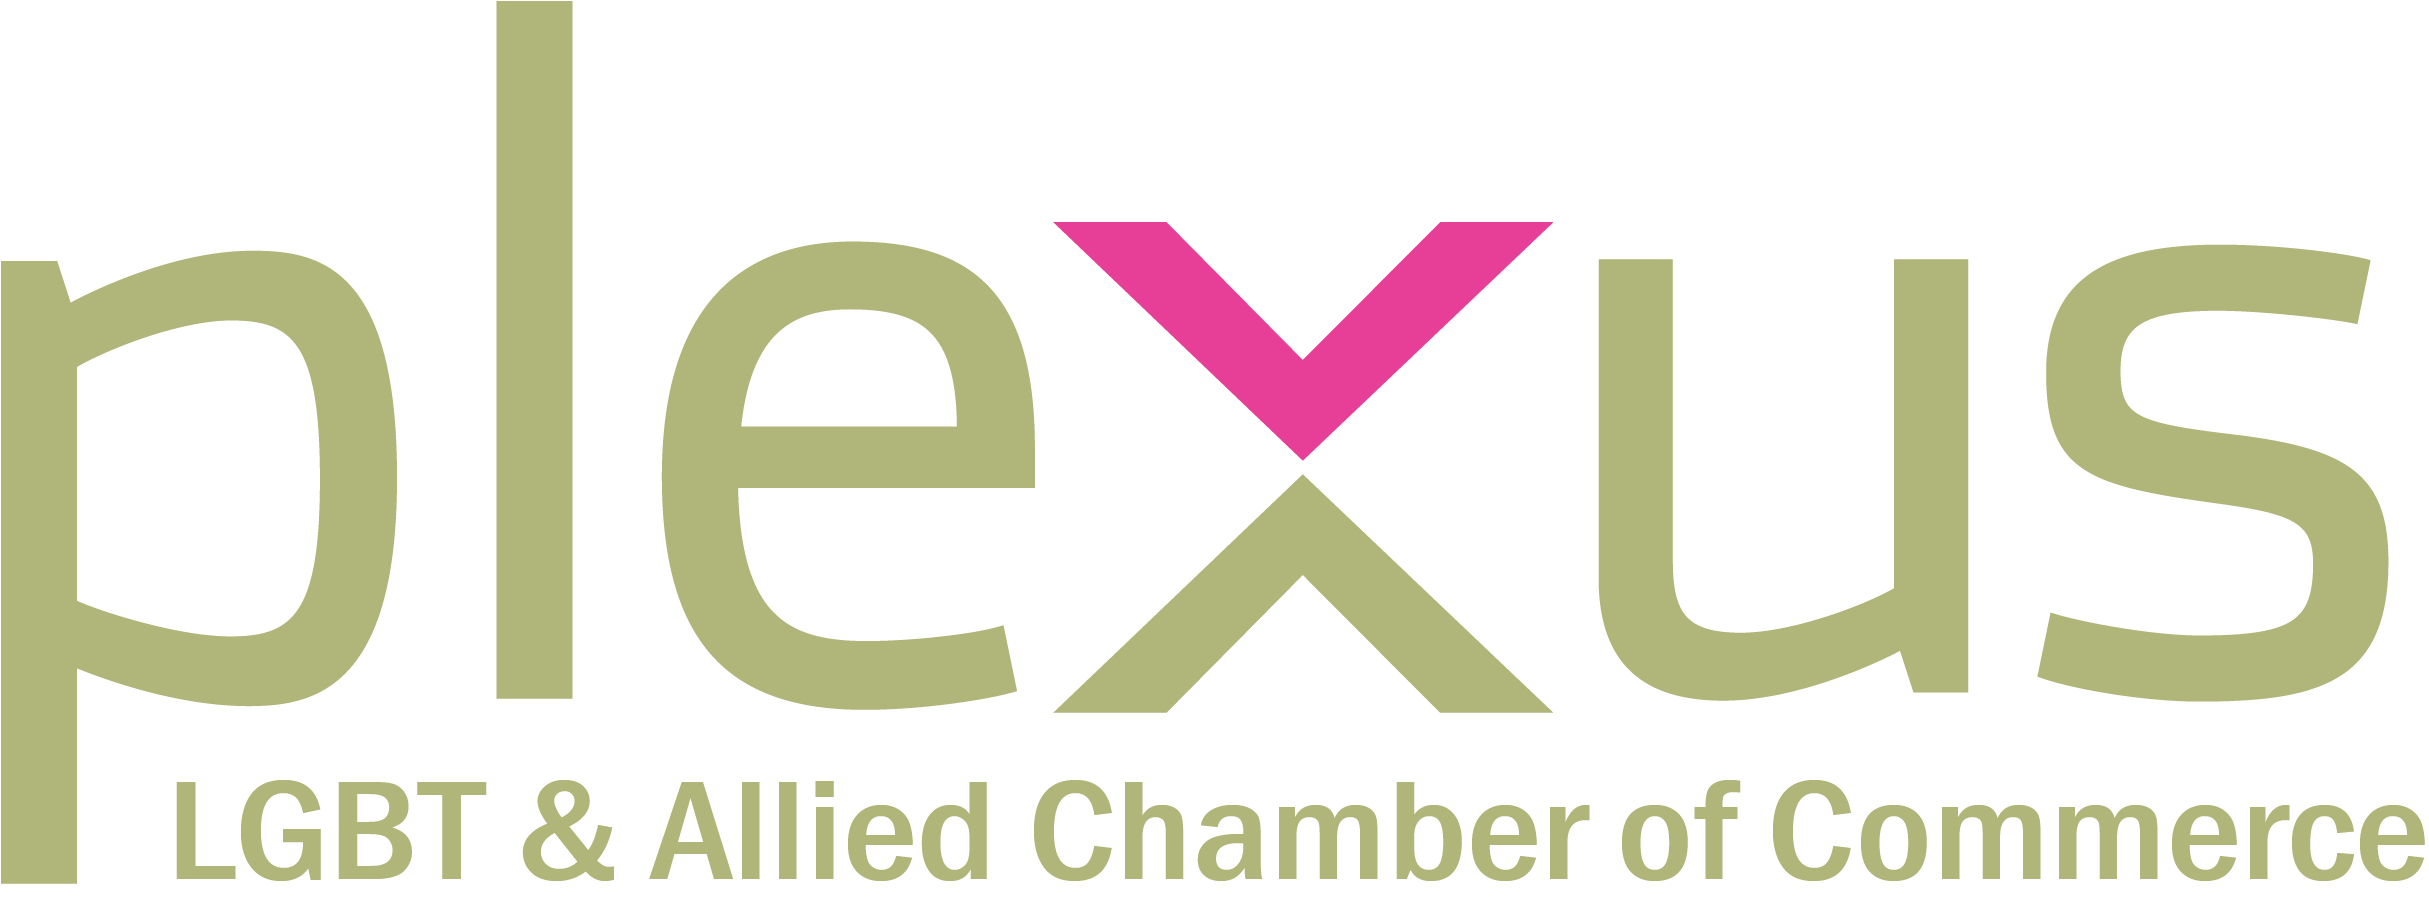 Plexus Logo Tagline Color.PNG